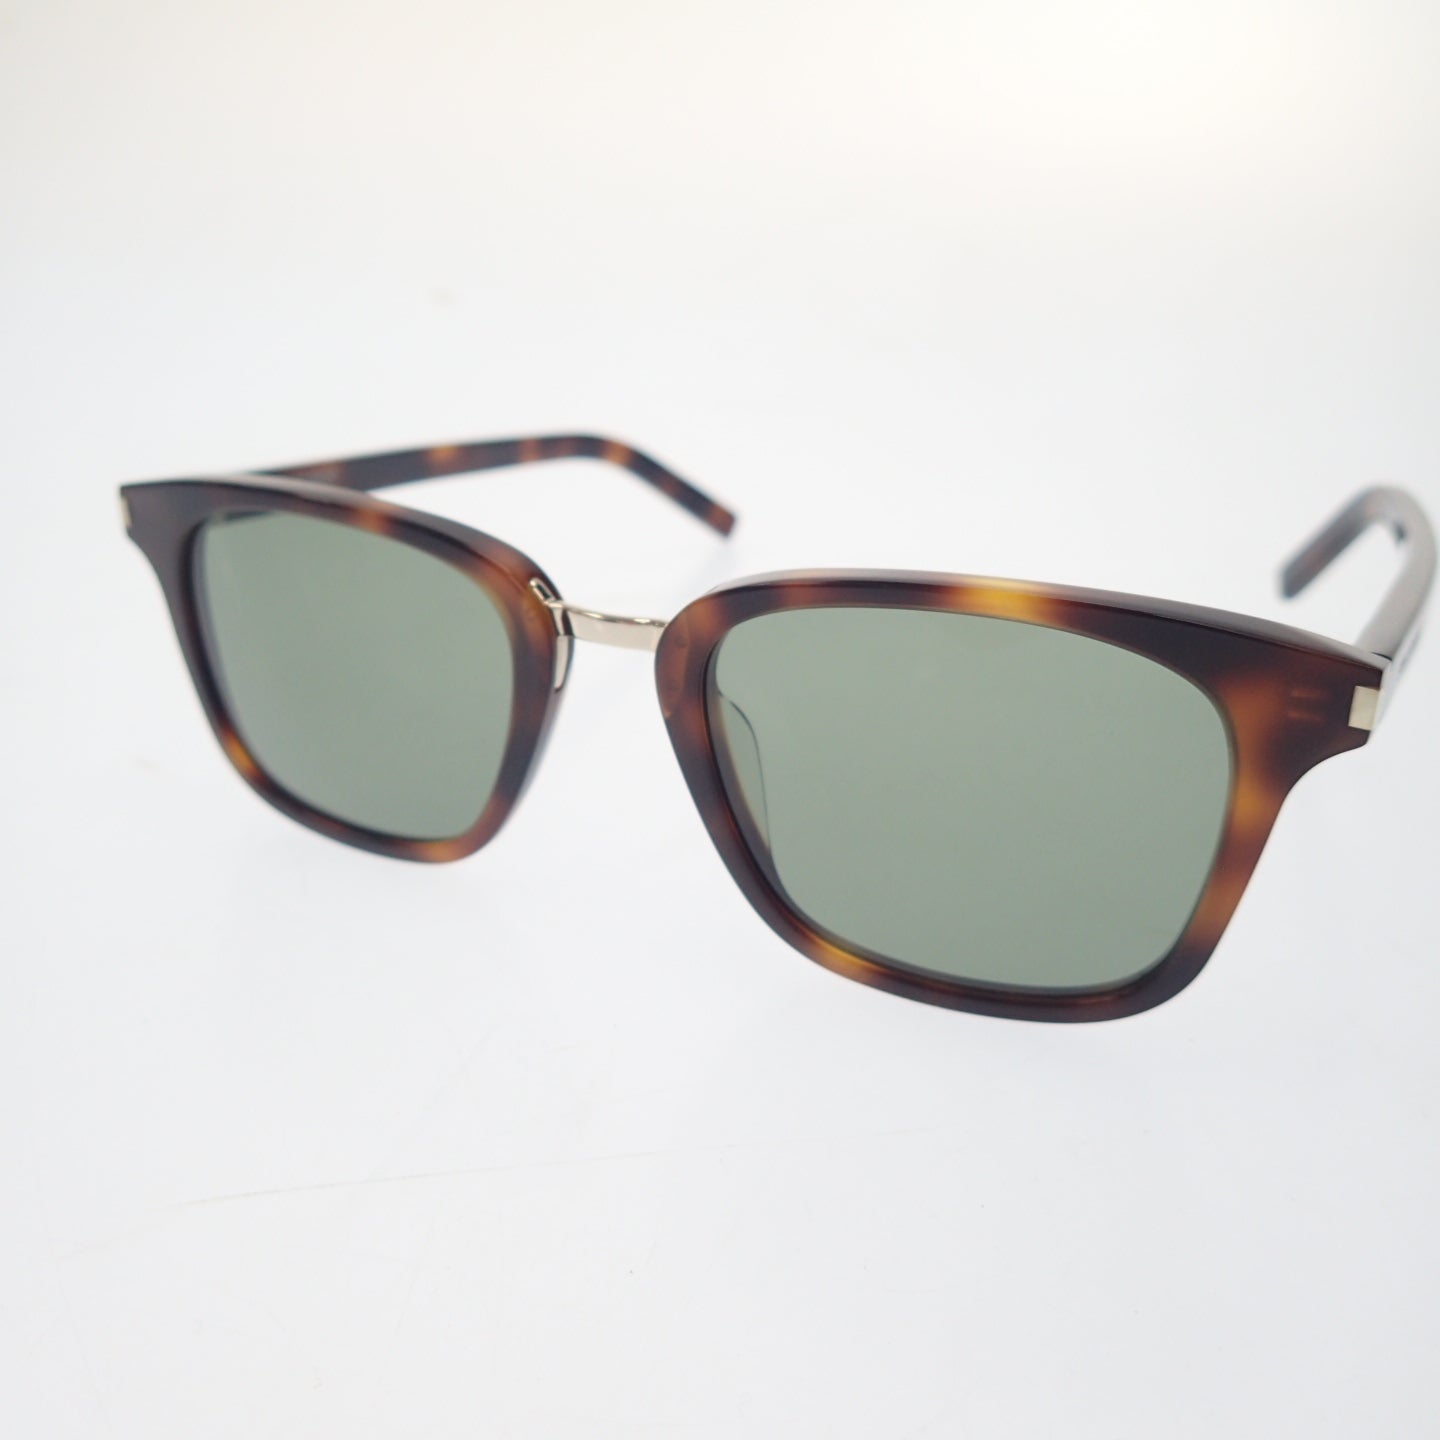 与新品一样◆Saint Laurent 太阳眼镜透明镜片龟甲花纹 SL288 SLIM 002 棕色 x 黑色盒子包含 Saint Laurent [AFI17] 